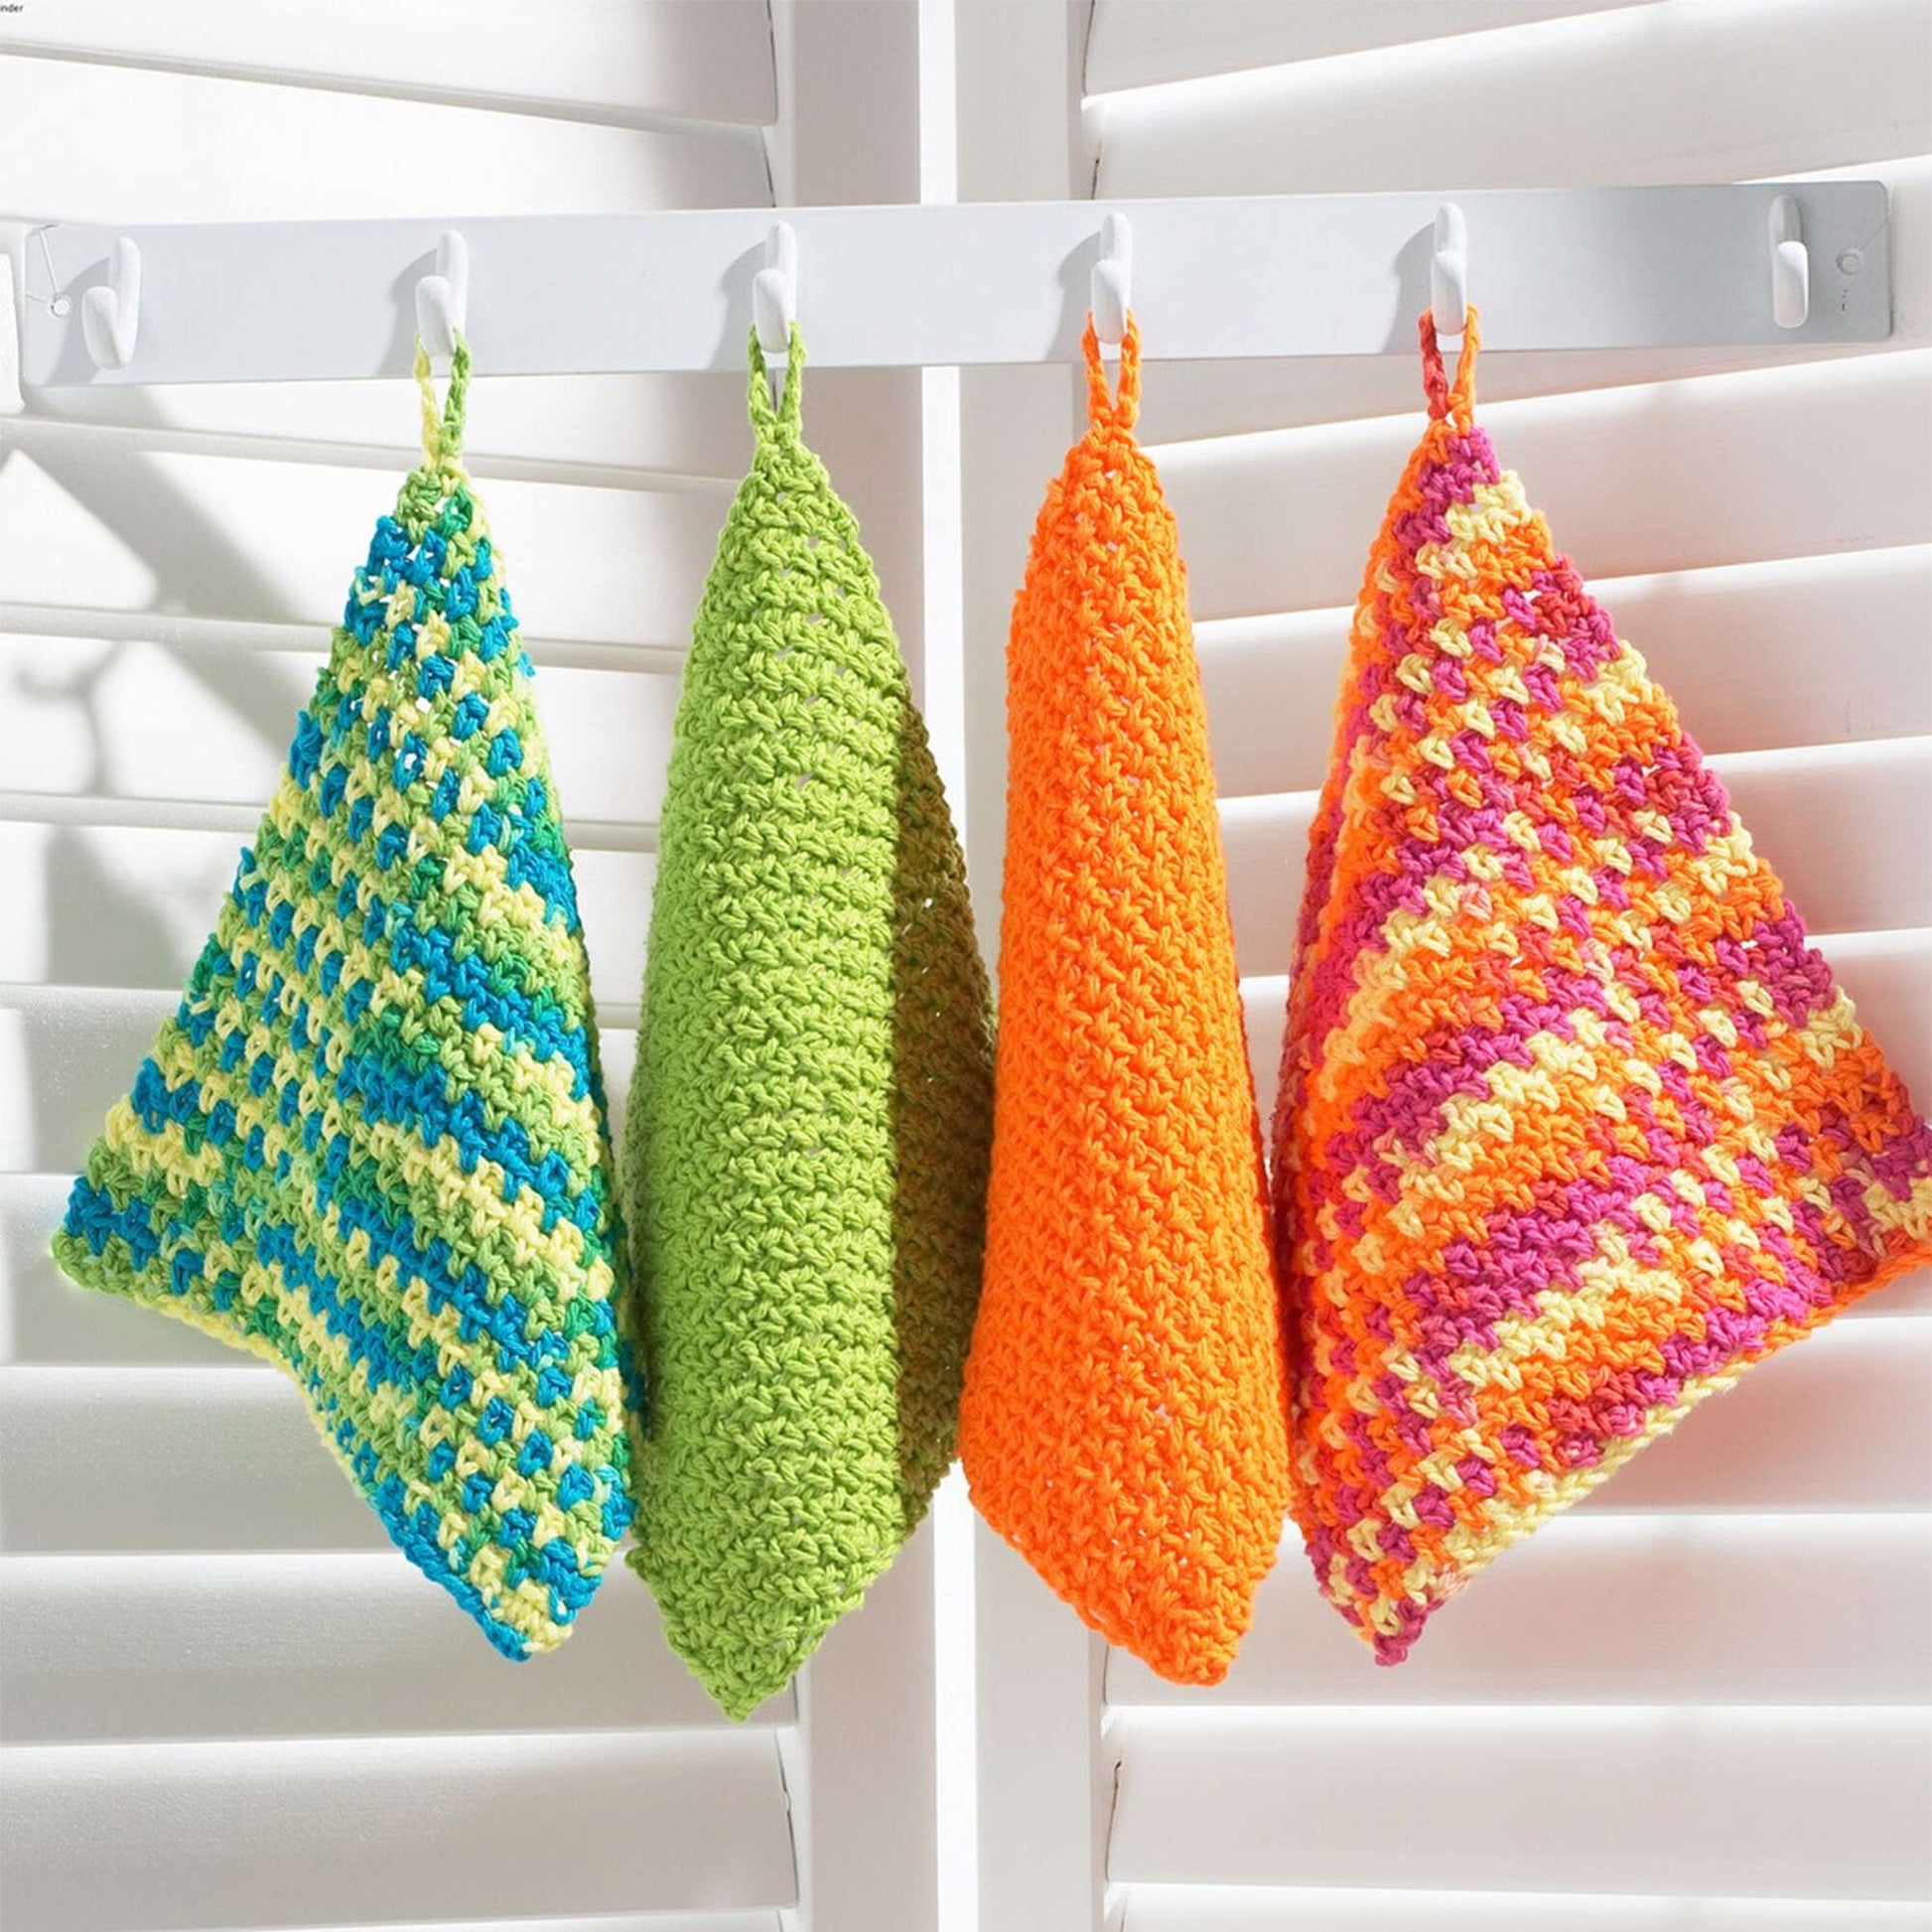 Bernat Crochet Dishcloth Crochet Dishcloth made in Bernat Handicrafter Cotton yarn